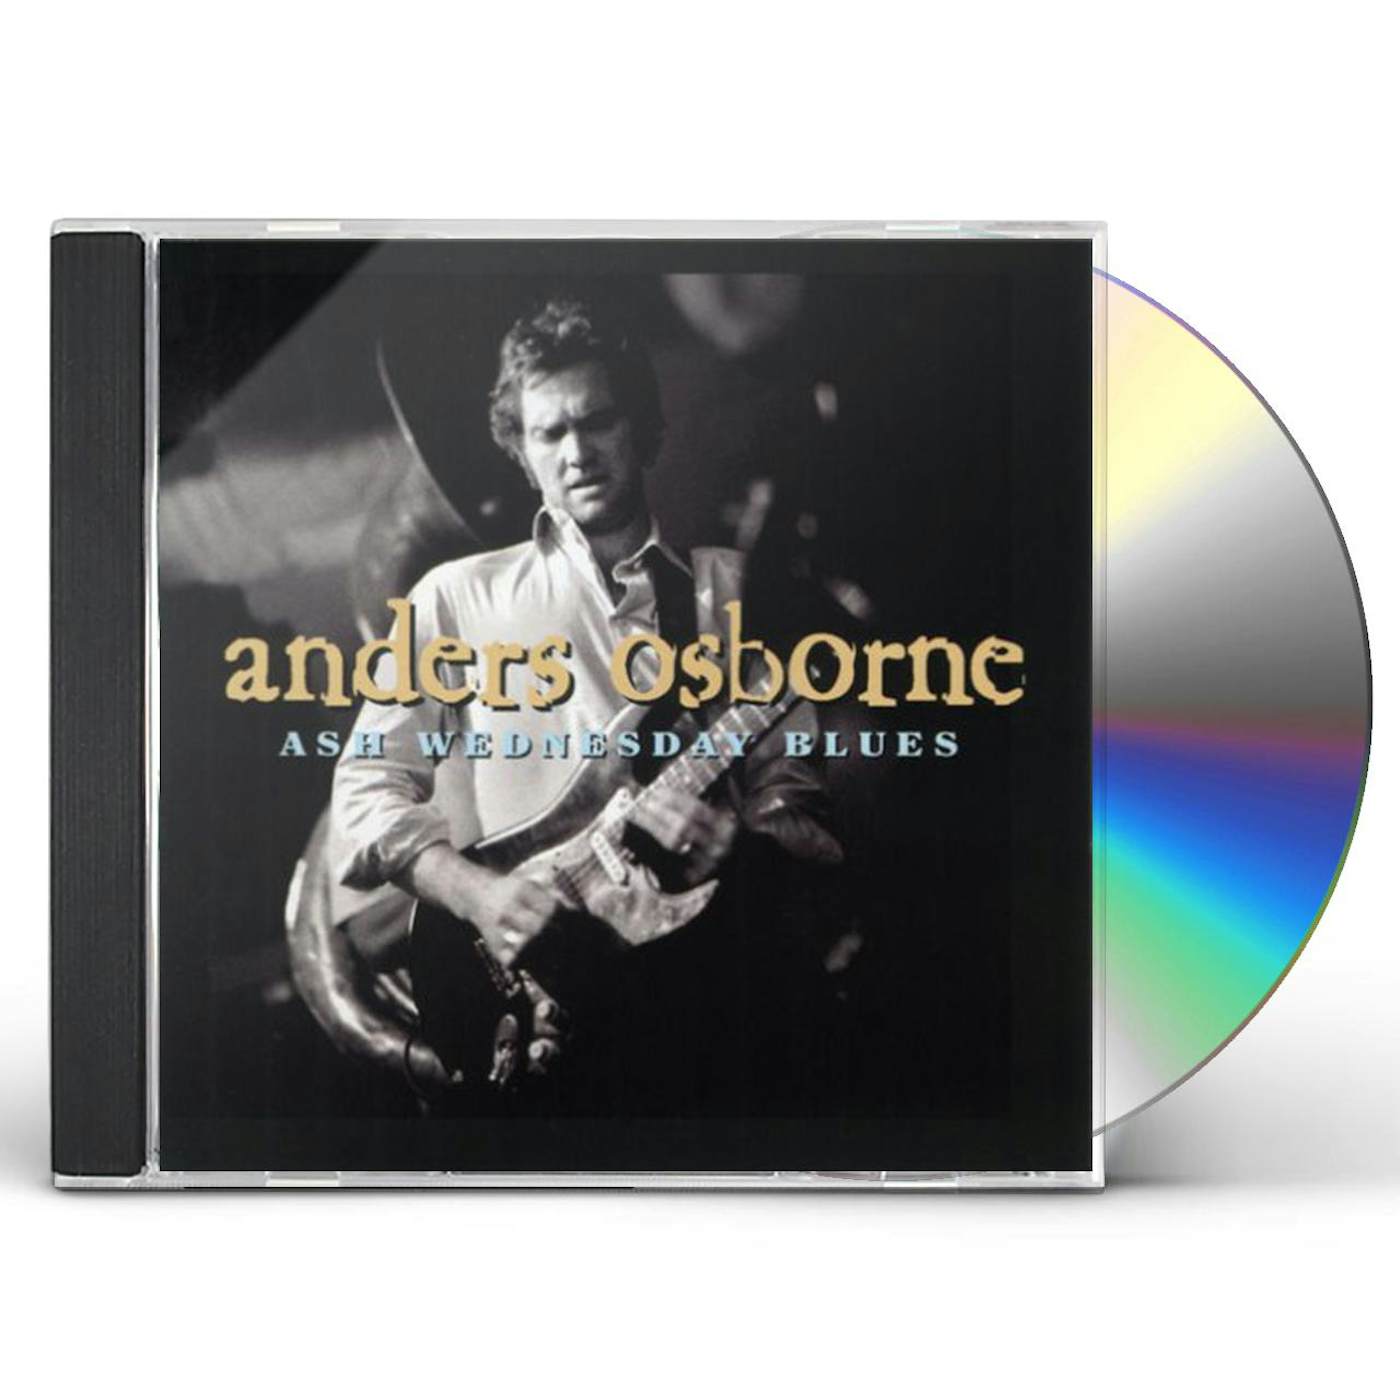 Anders Osborne ASH WEDNESDAY BLUES CD